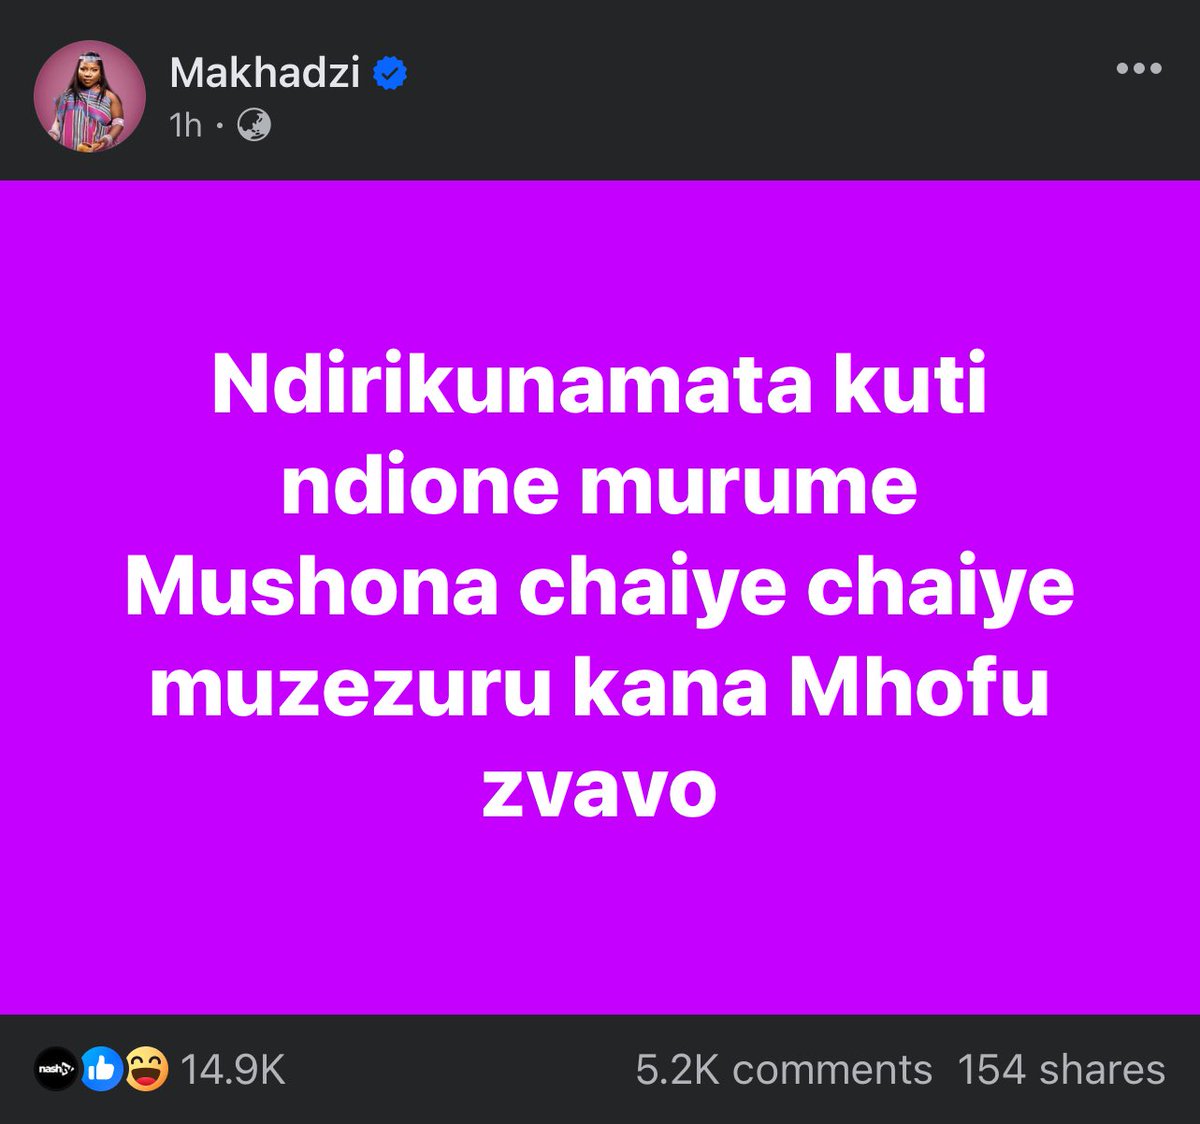 If you are a single Shona , Zezuru and Mhofu man ; send your CV to Makhadzi ASAP! No chancers please.